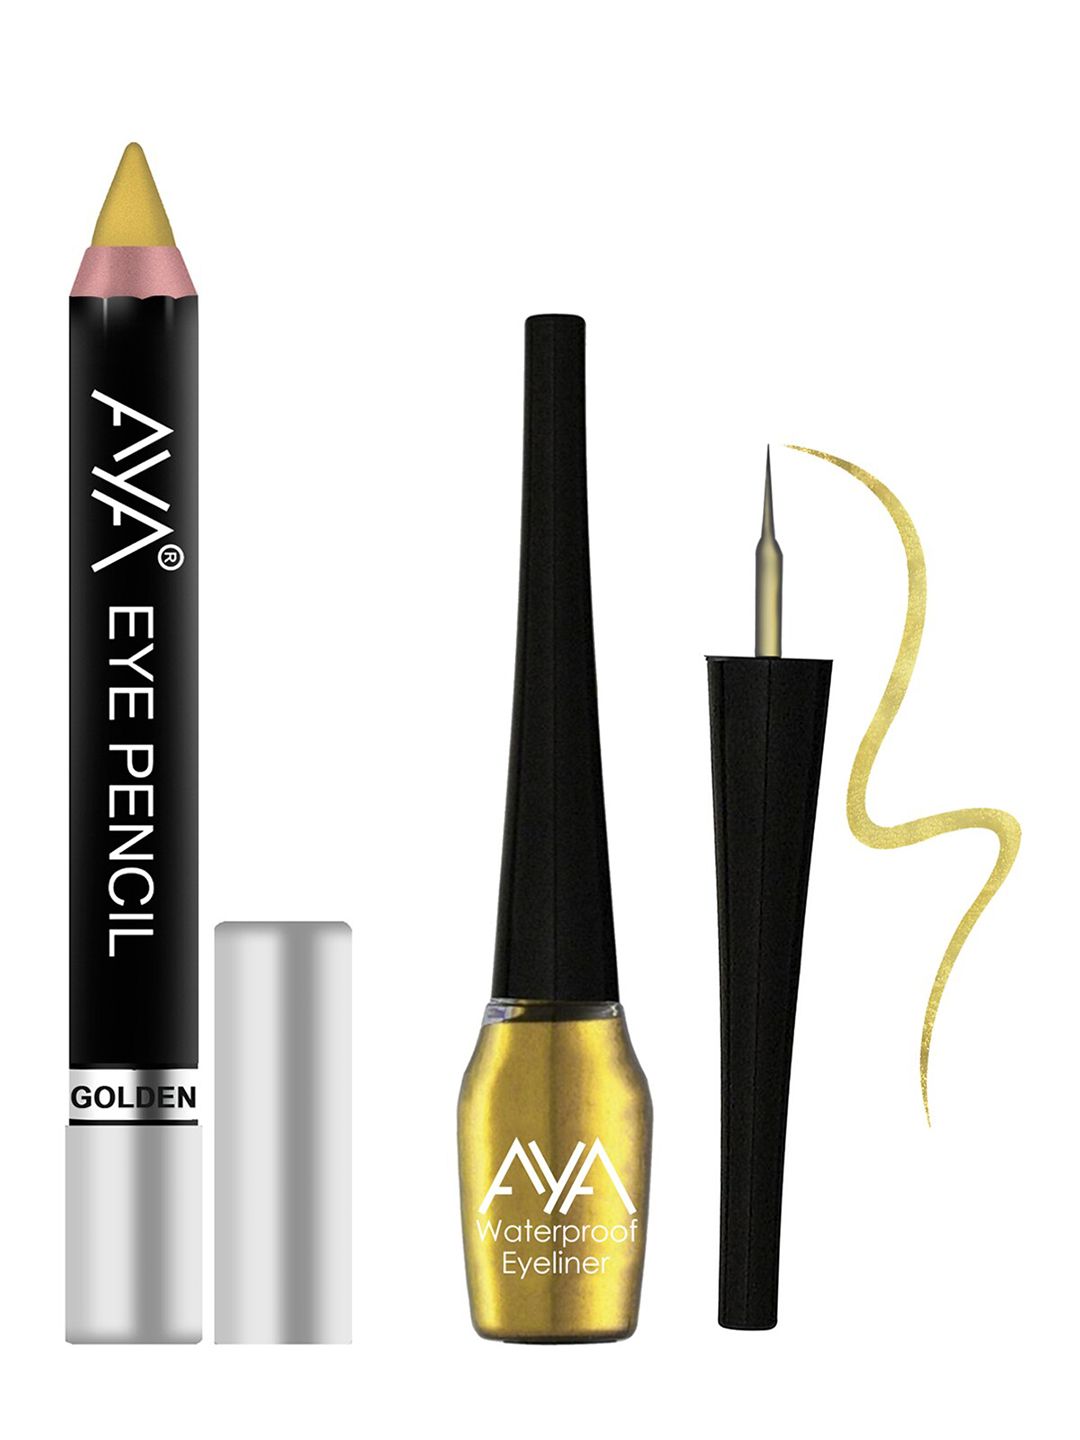 AYA Set of Eye Pencil Kajal Eyeliner & Waterproof Eyeliner - Golden Price in India